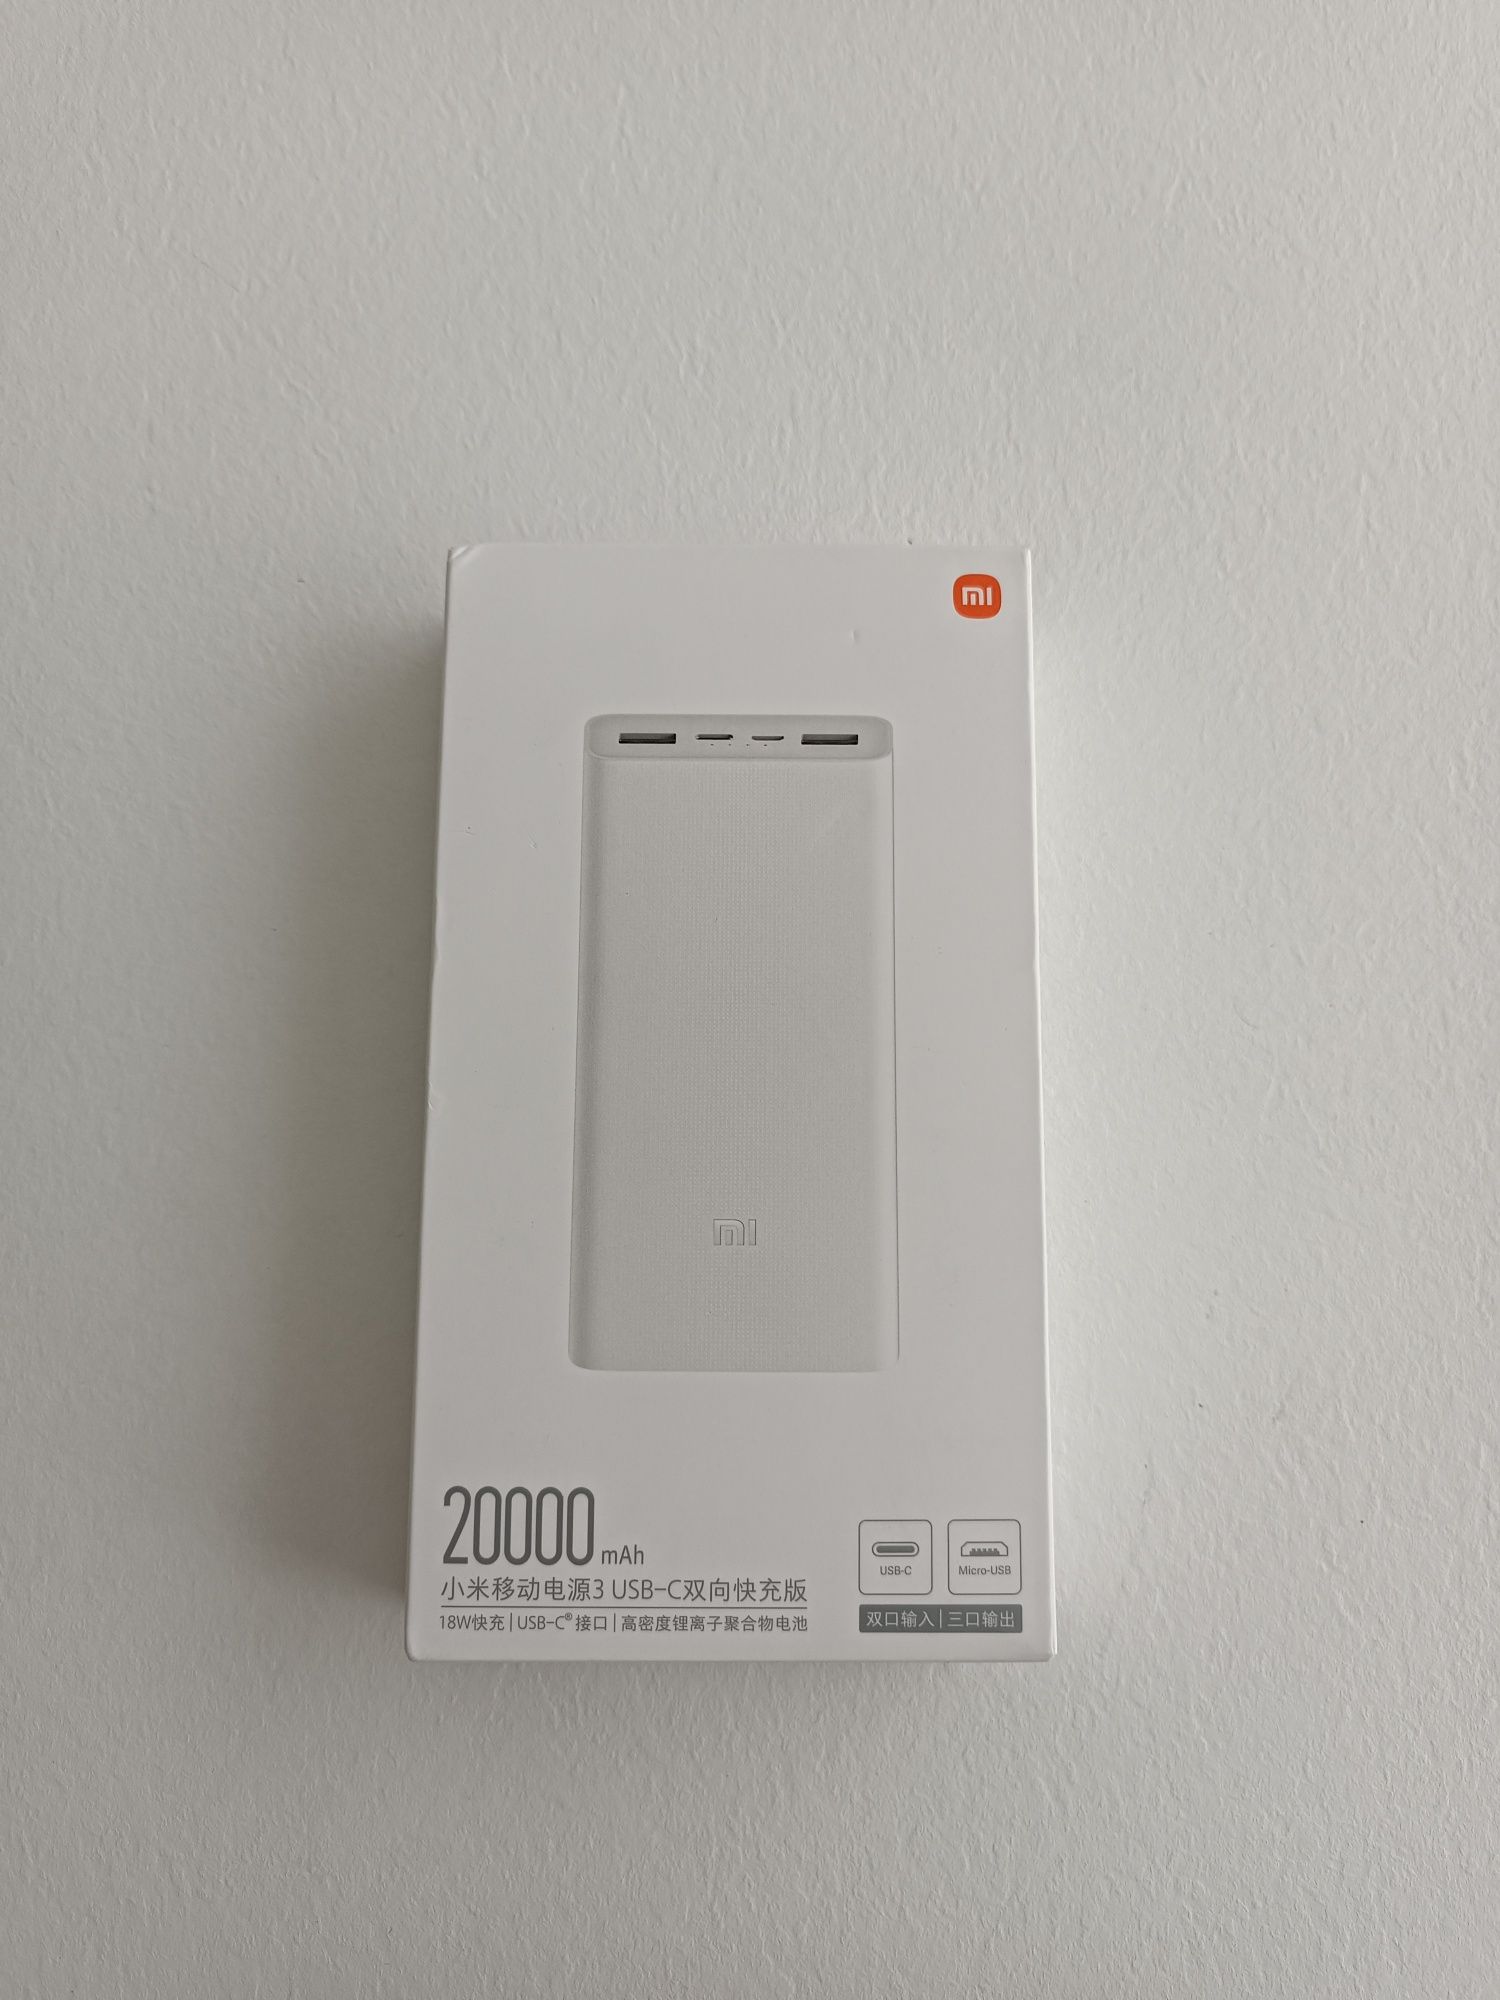 Xiaomi MI 3 Power Bank 20000mAh Fast Charge